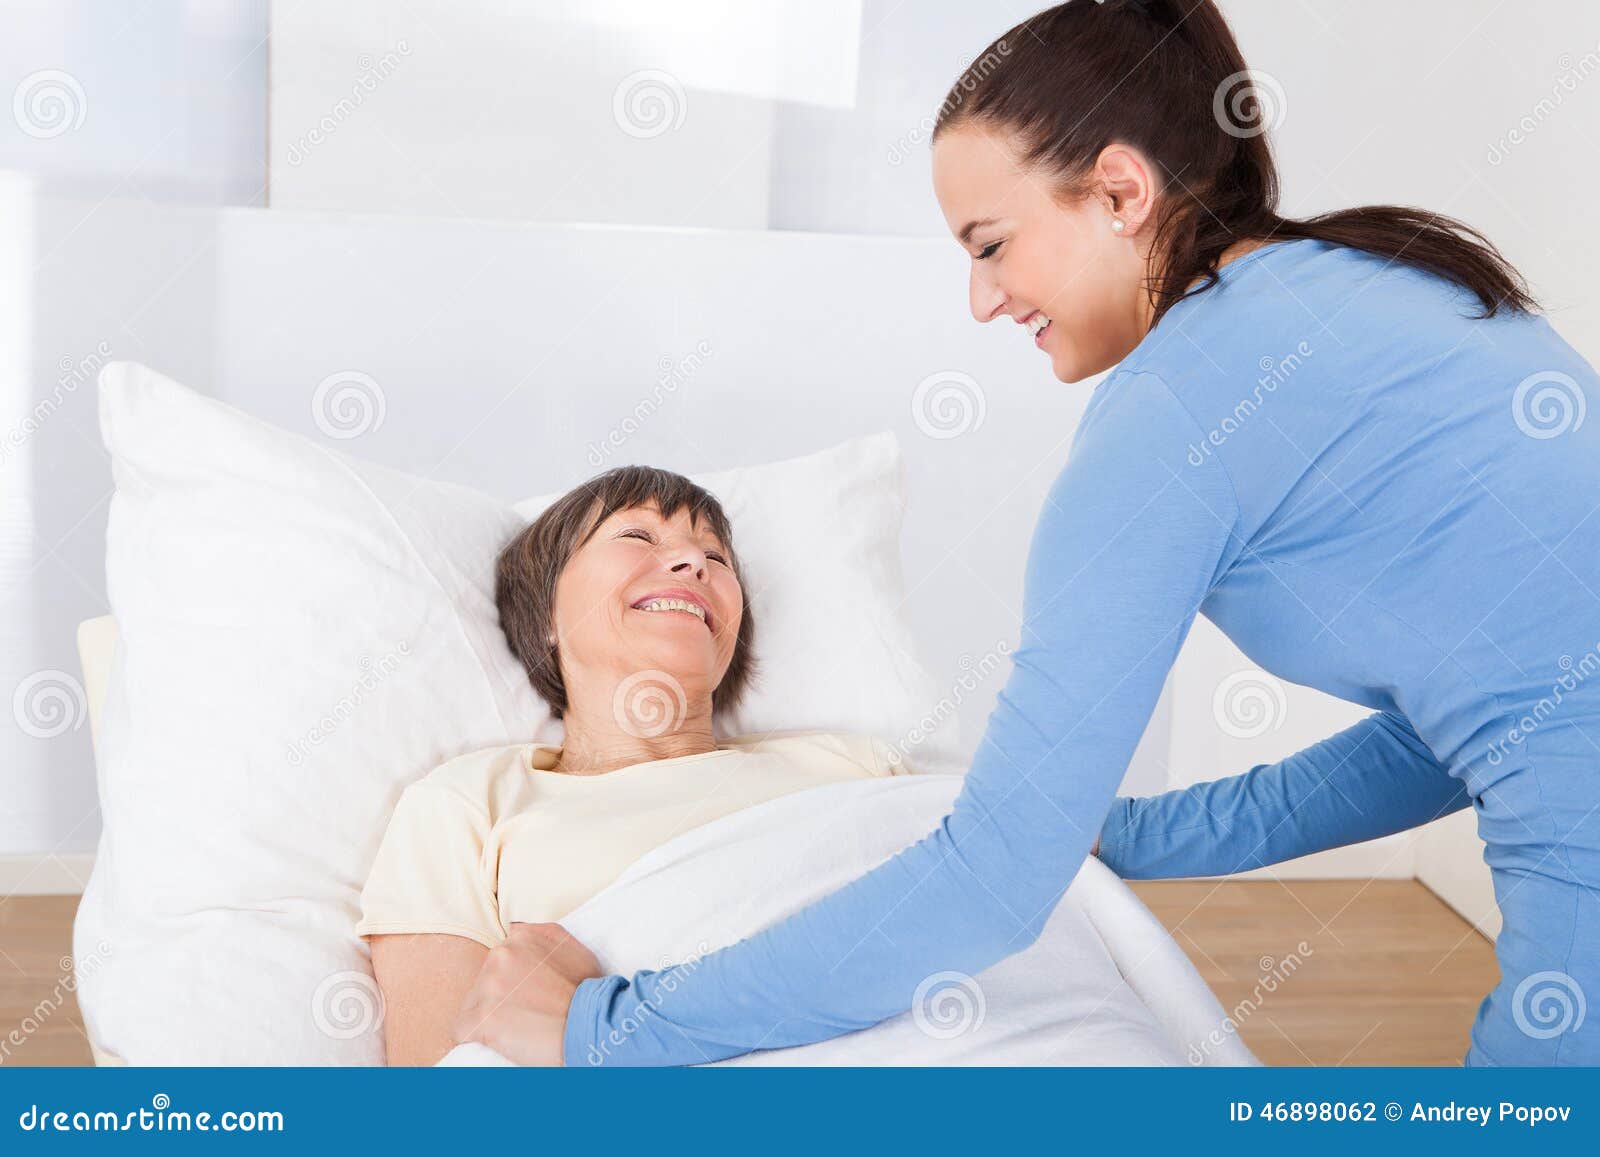 caretaker covering senior woman with blanket